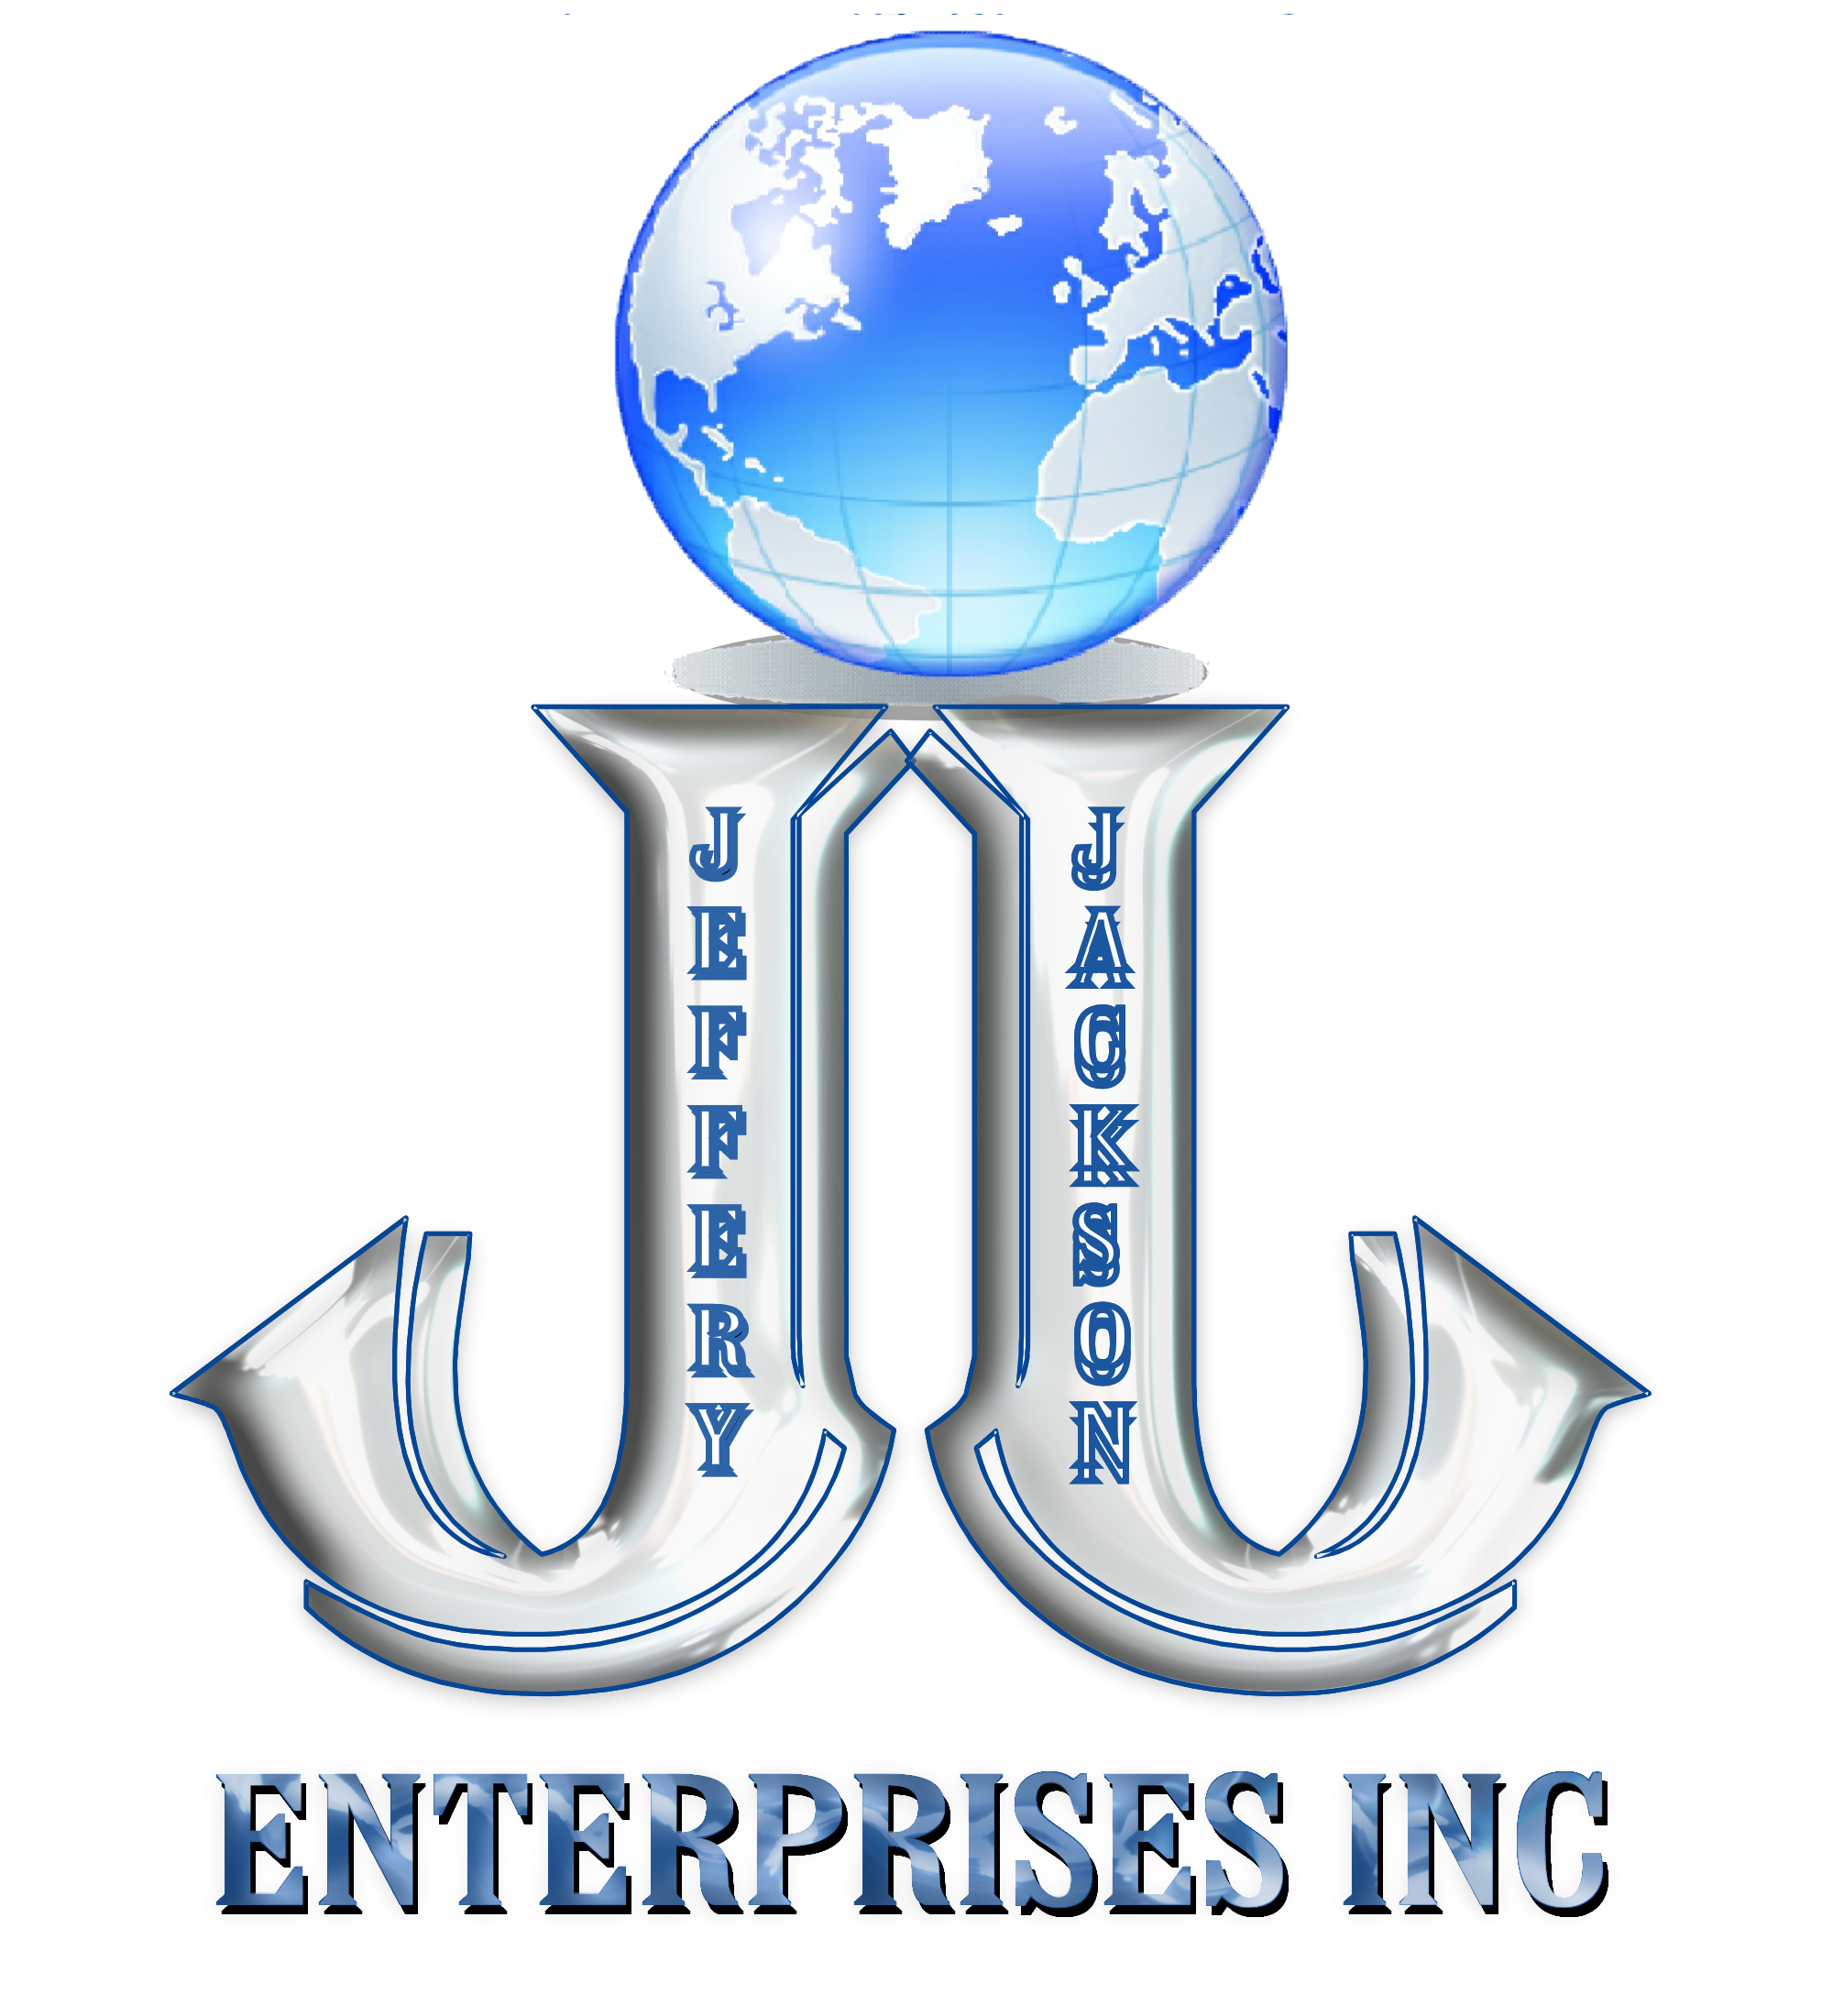 Jeffery Jackson Enterprises Inc